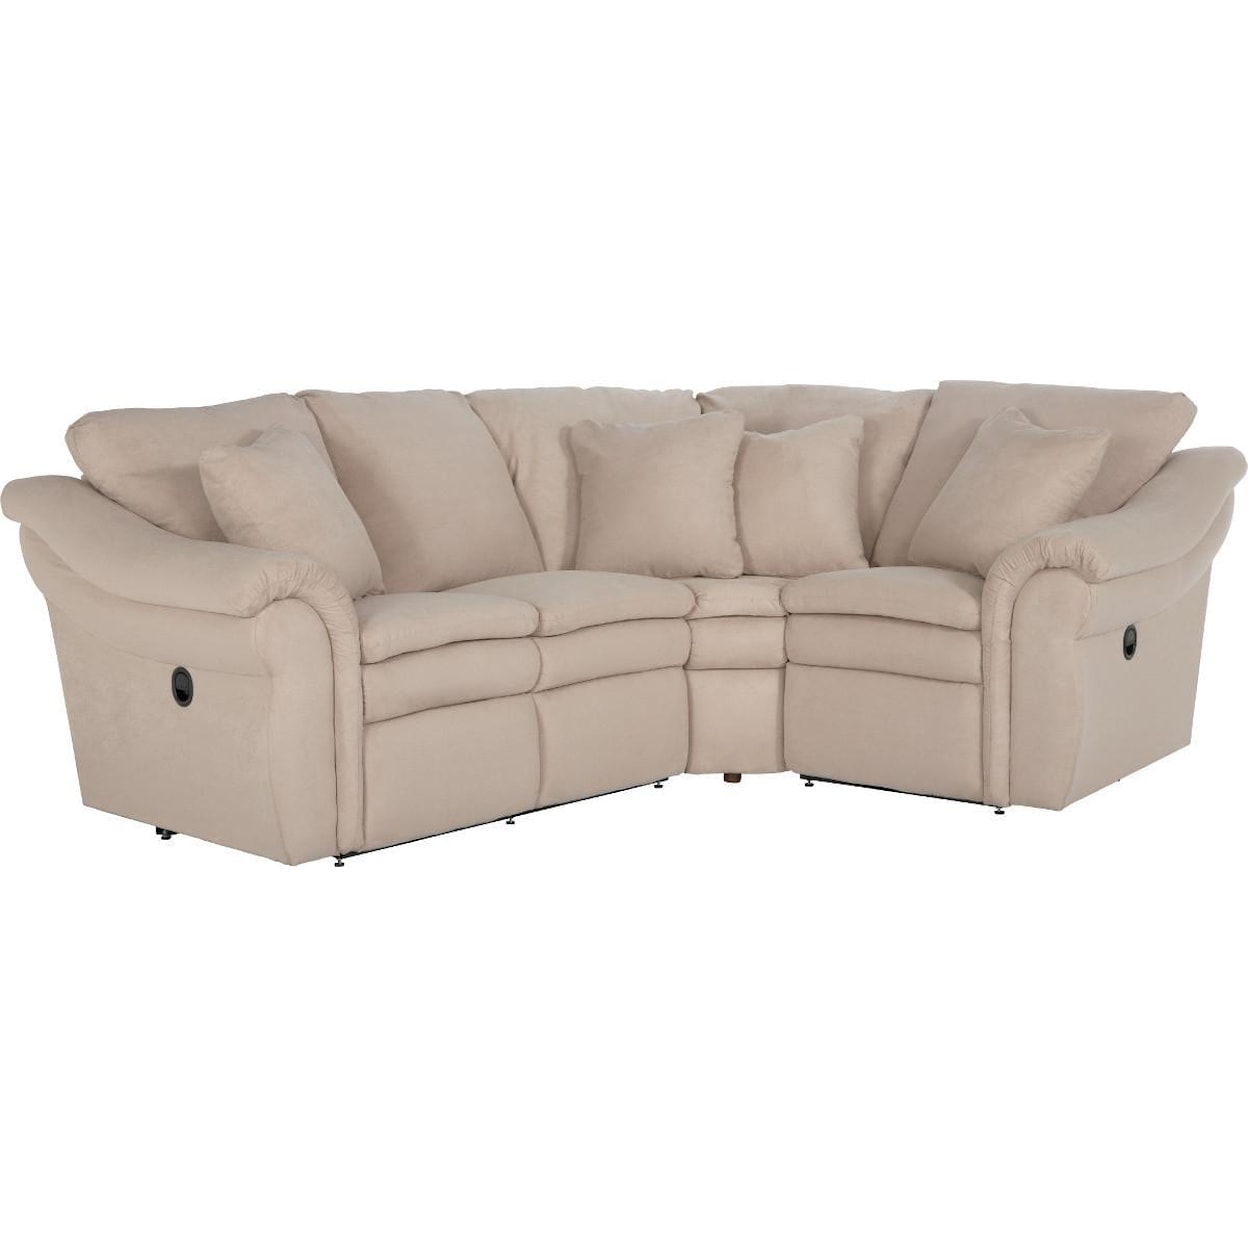 La-Z-Boy Devon 3 Pc Reclining Sectional Sofa